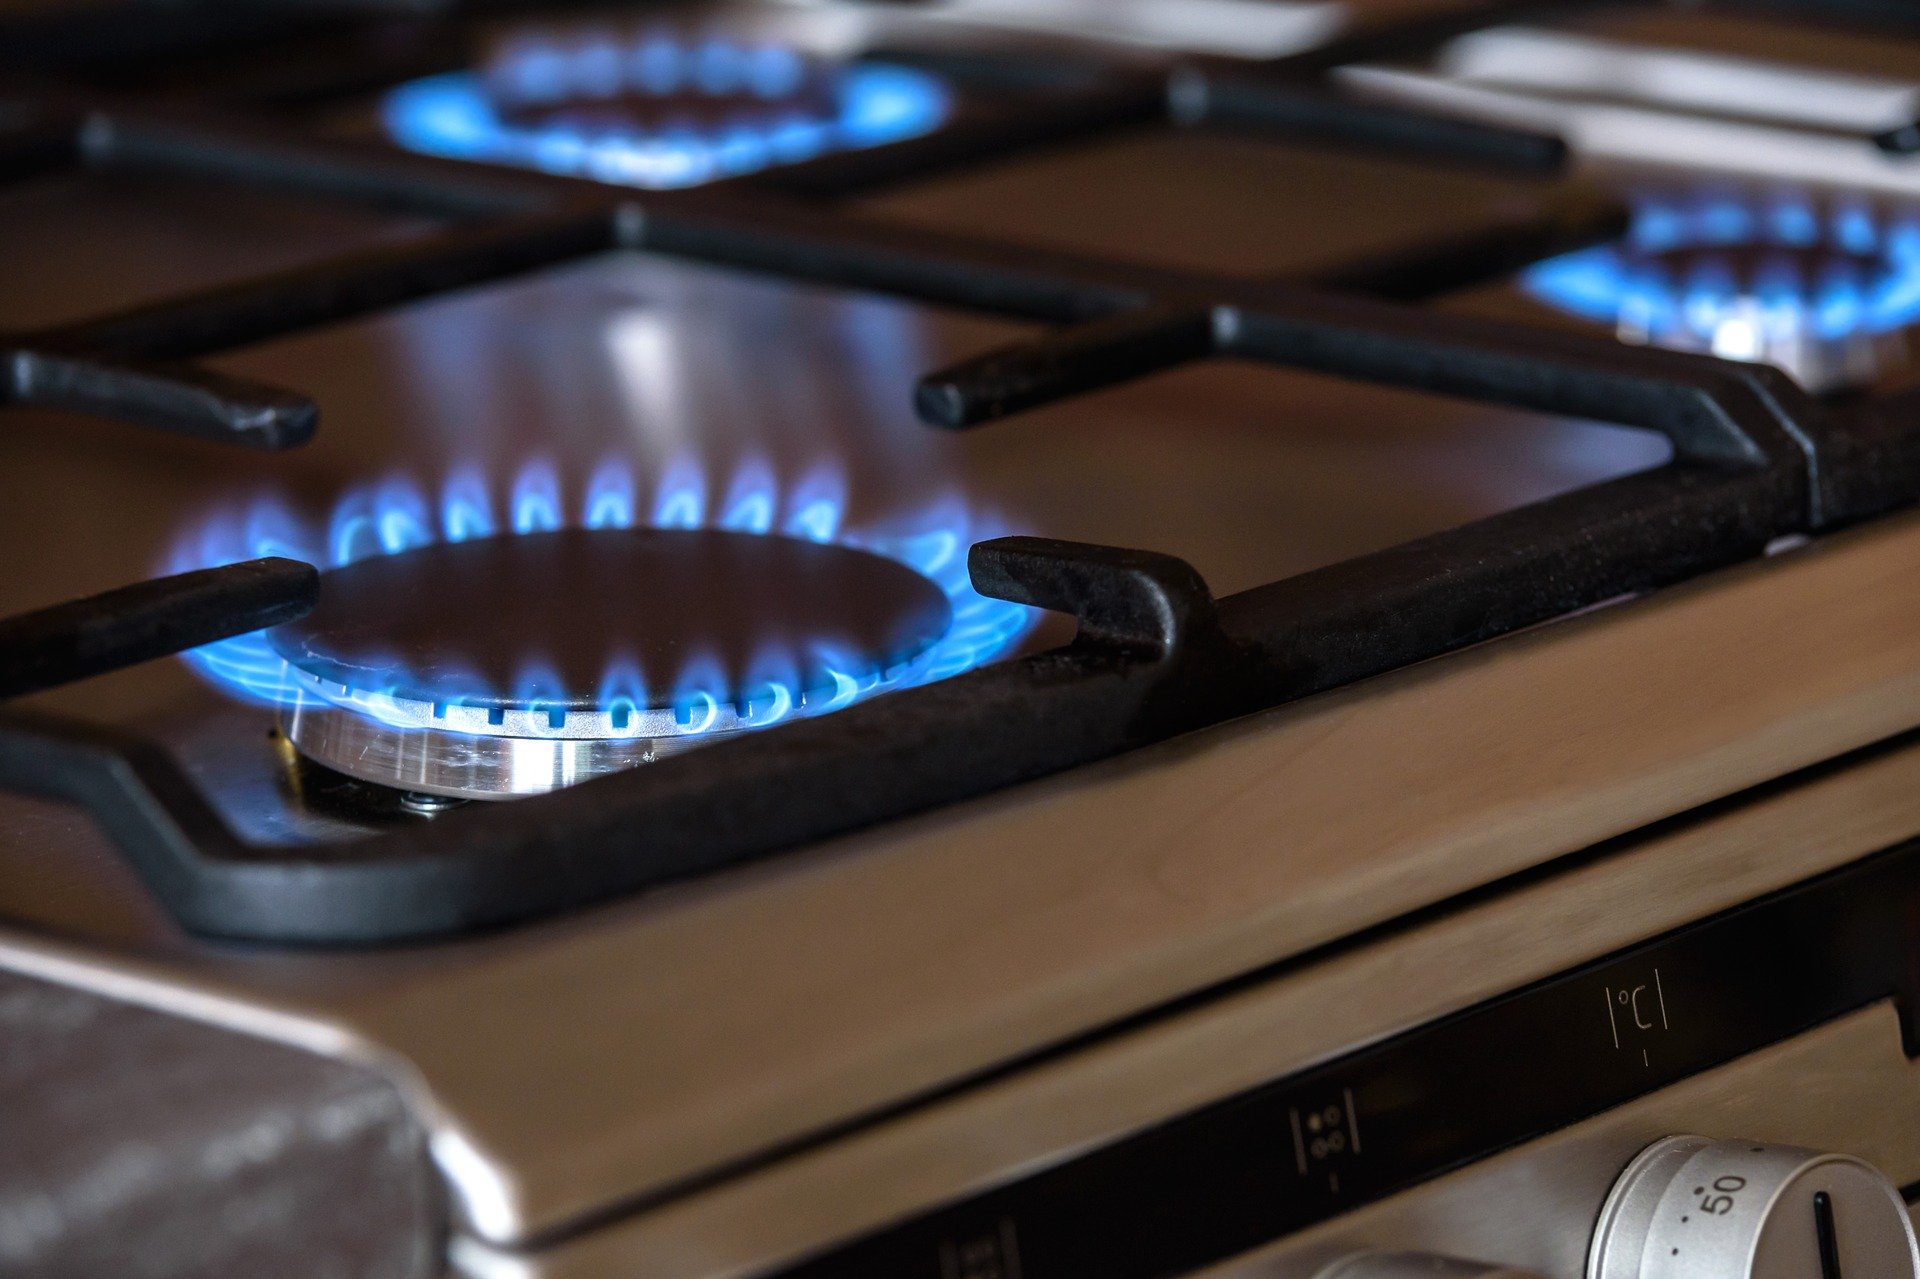 Pictured - Gas burner oven cooker | Source: Pixabay